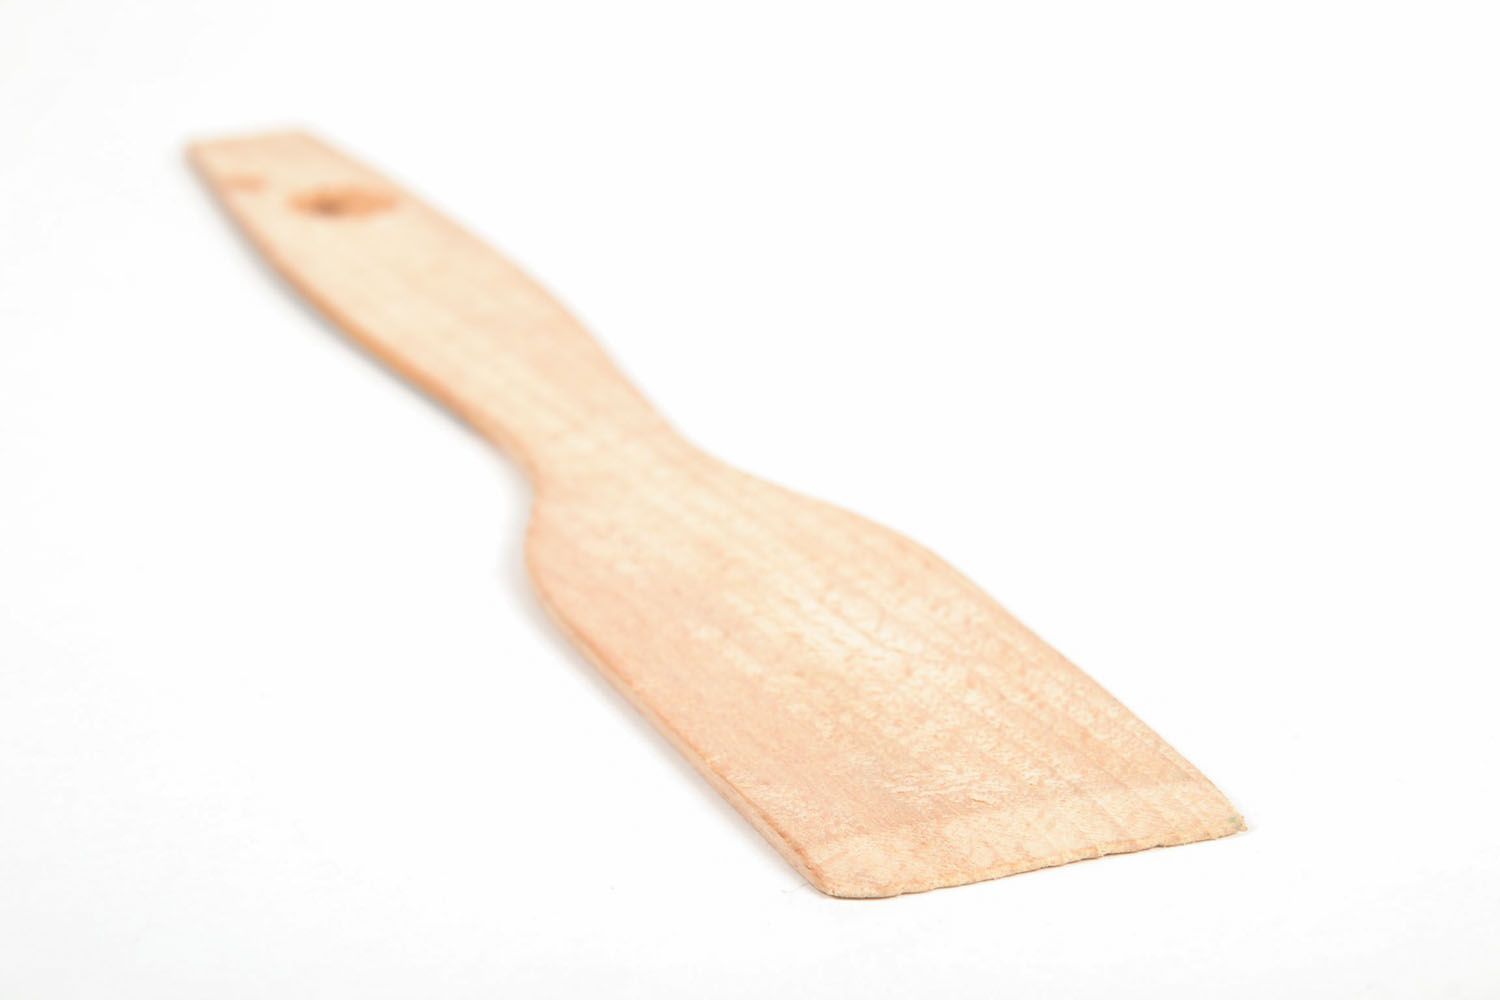 Painted wooden spatula photo 3